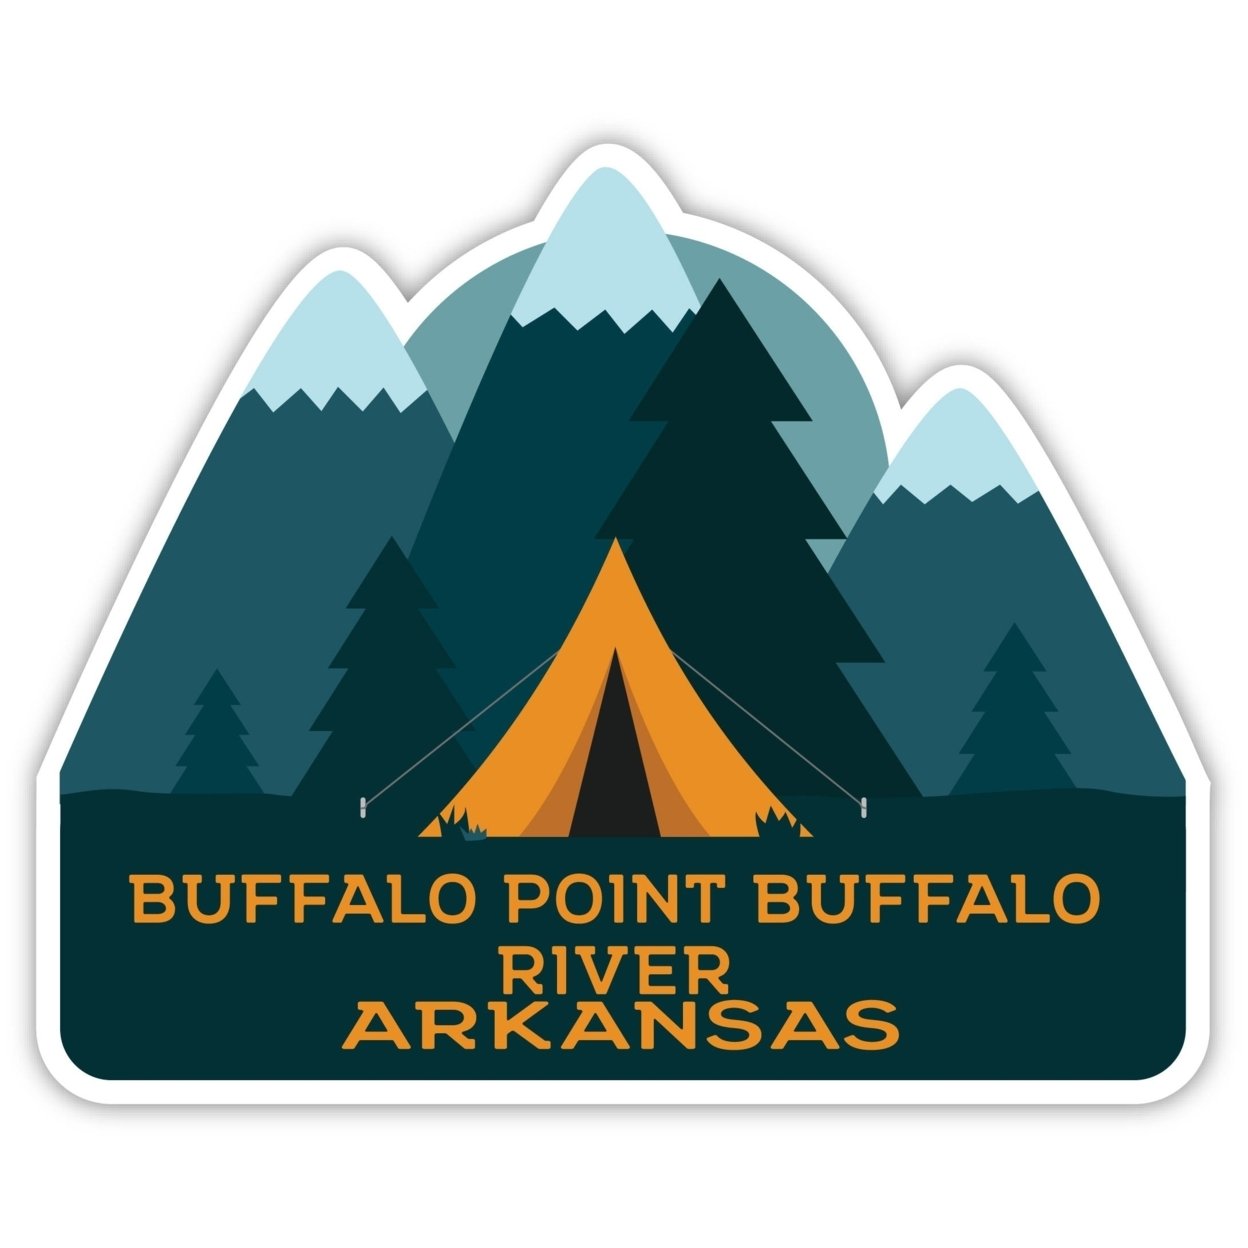 Buffalo Point Buffalo River Arkansas Souvenir Decorative Stickers (Choose Theme And Size) - Single Unit, 4-Inch, Tent